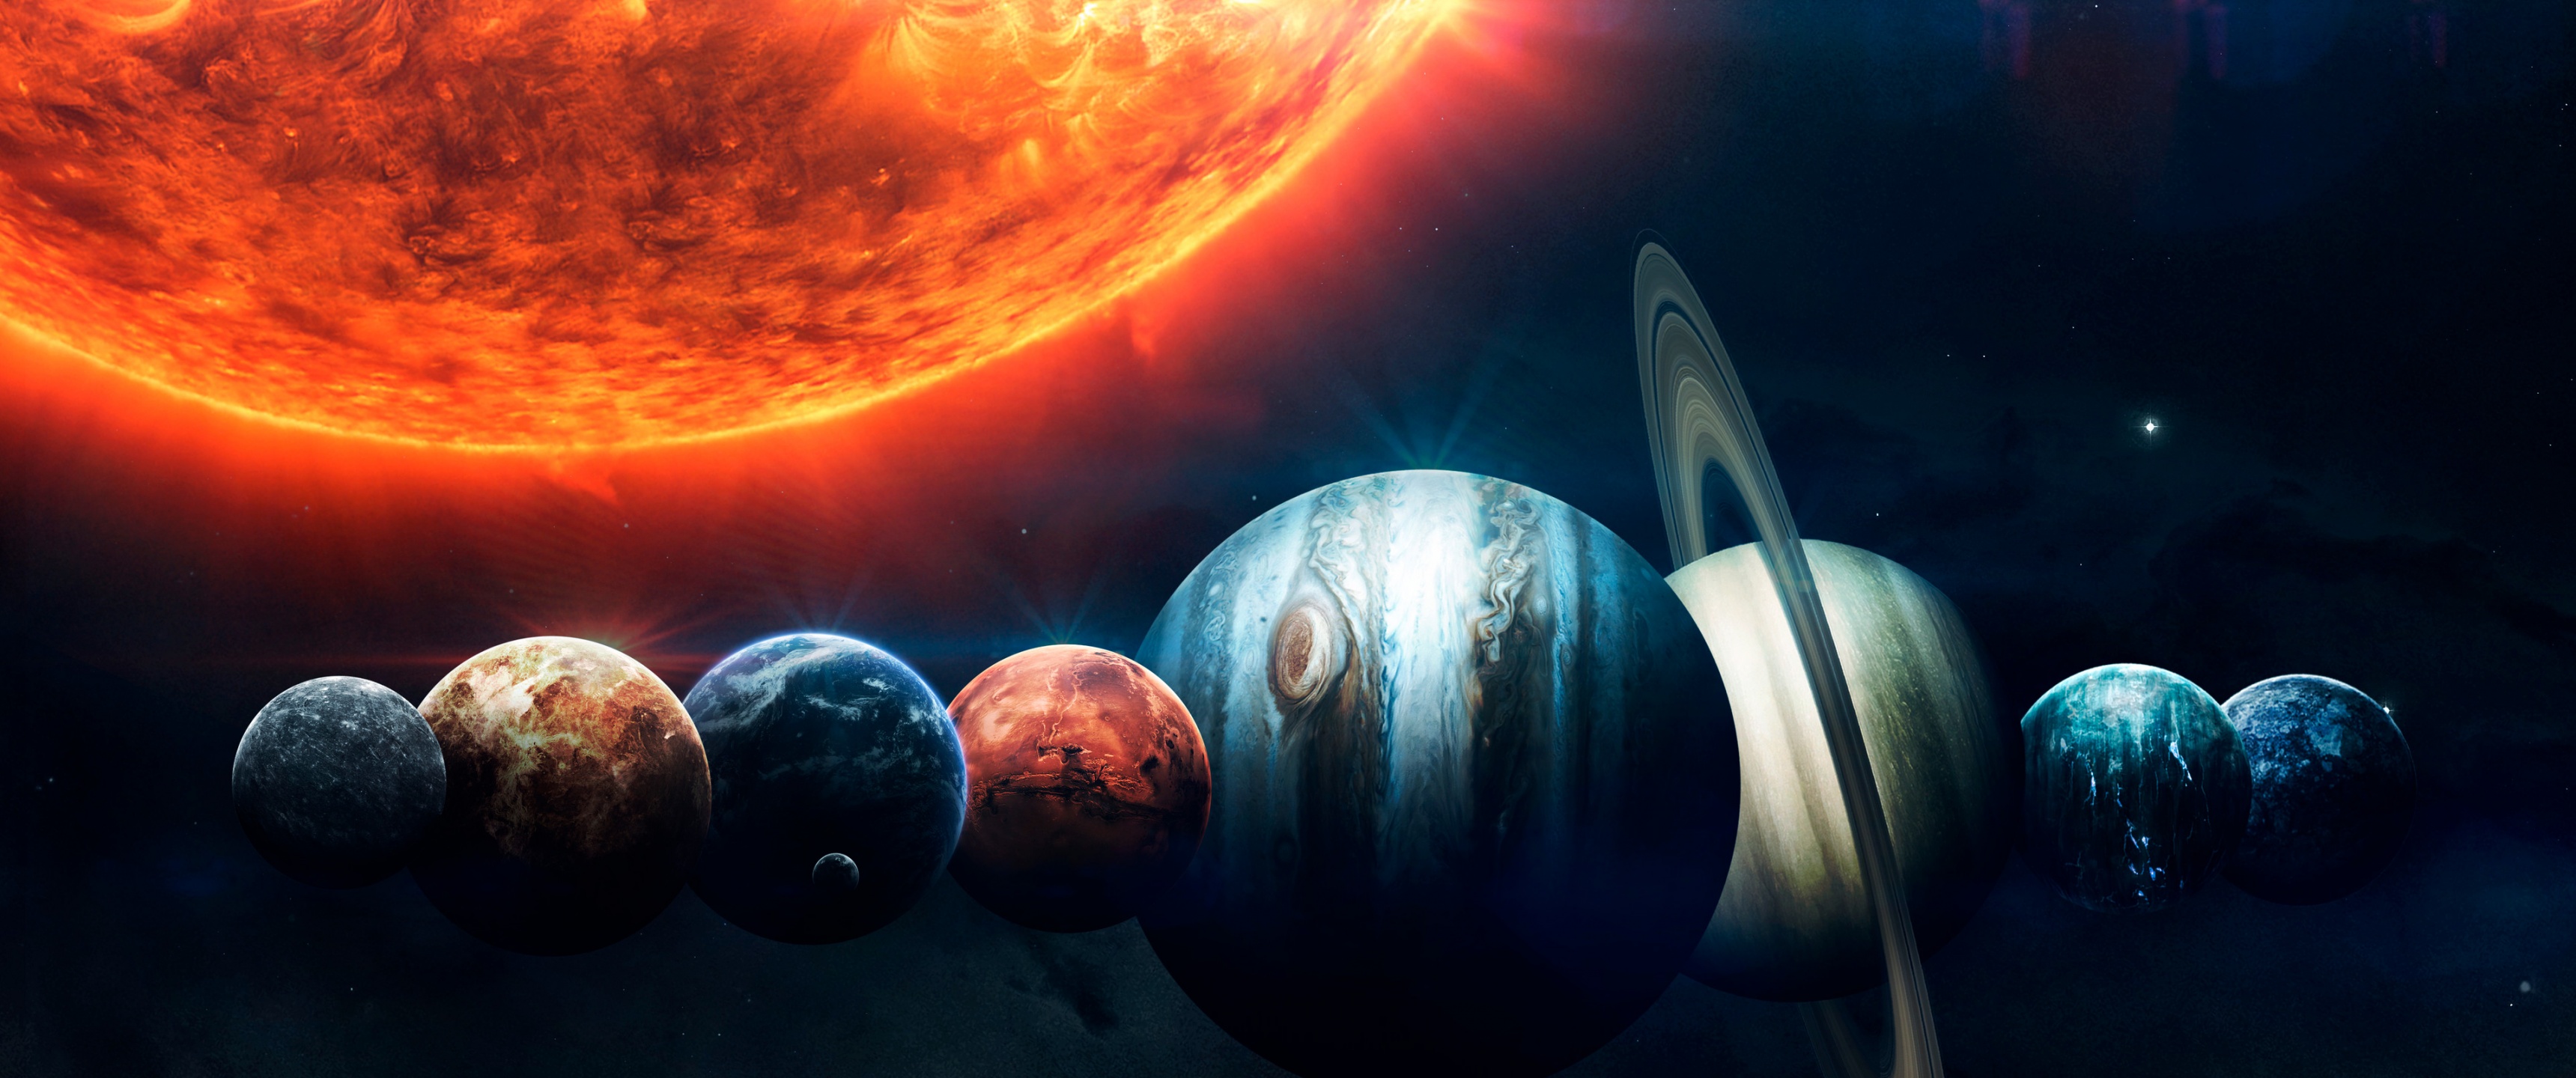 Solar system Wallpaper 4K, Planets, Sun, Orange, Stars, Burning, Earth, Space